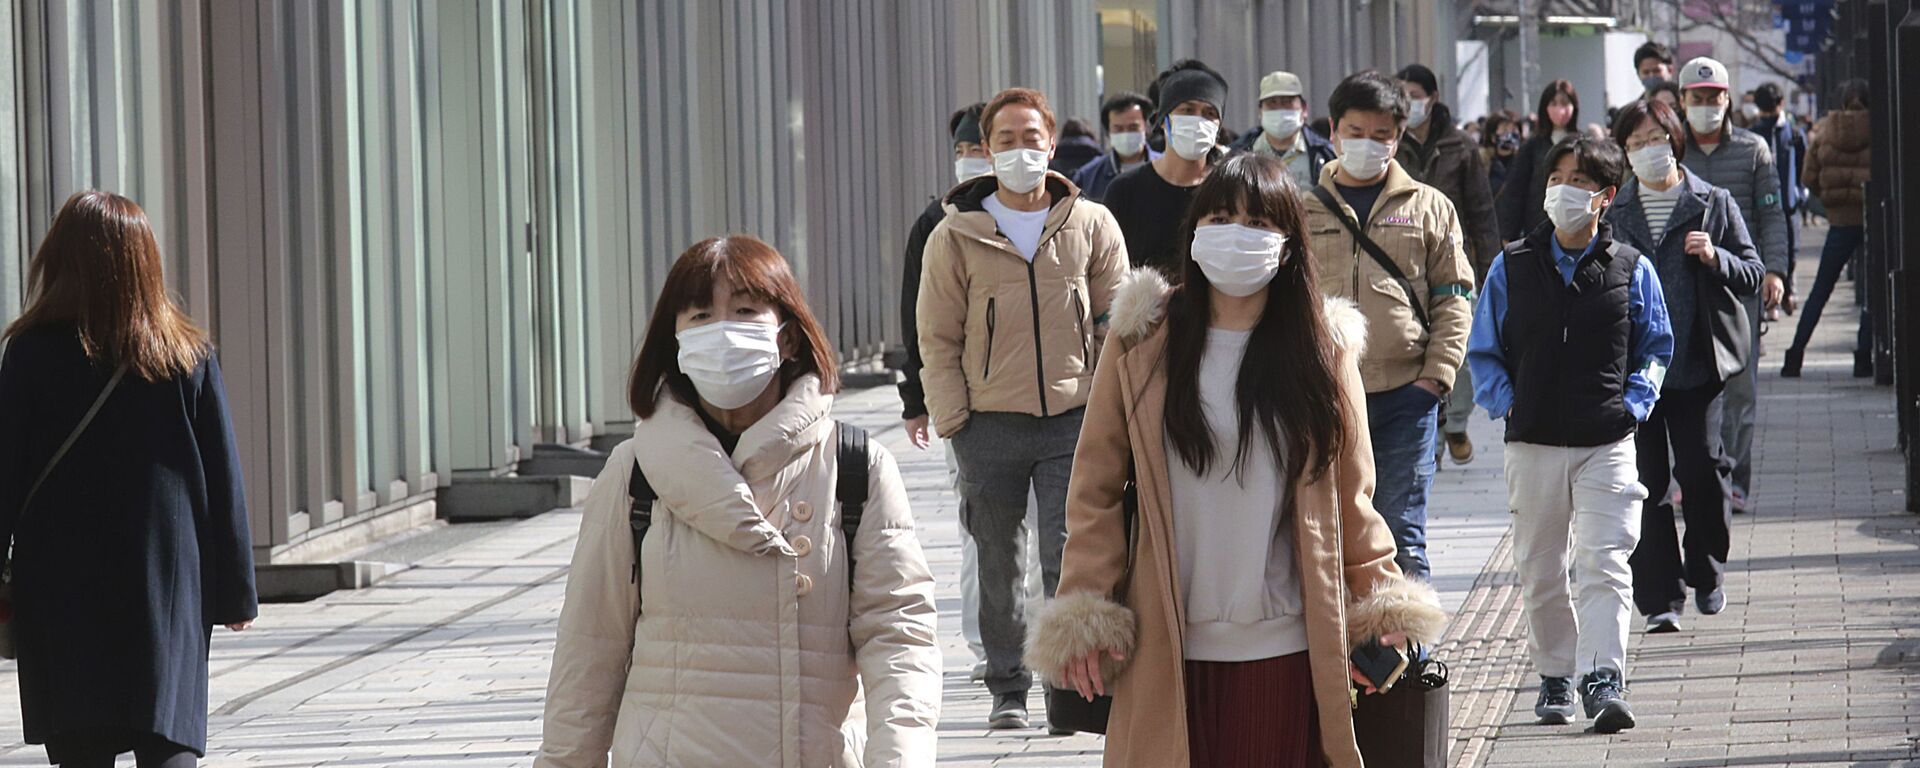 Пандемия коронавируса COVID 19 - люди в масках в Токио, Япония - Sputnik Грузия, 1920, 02.02.2021